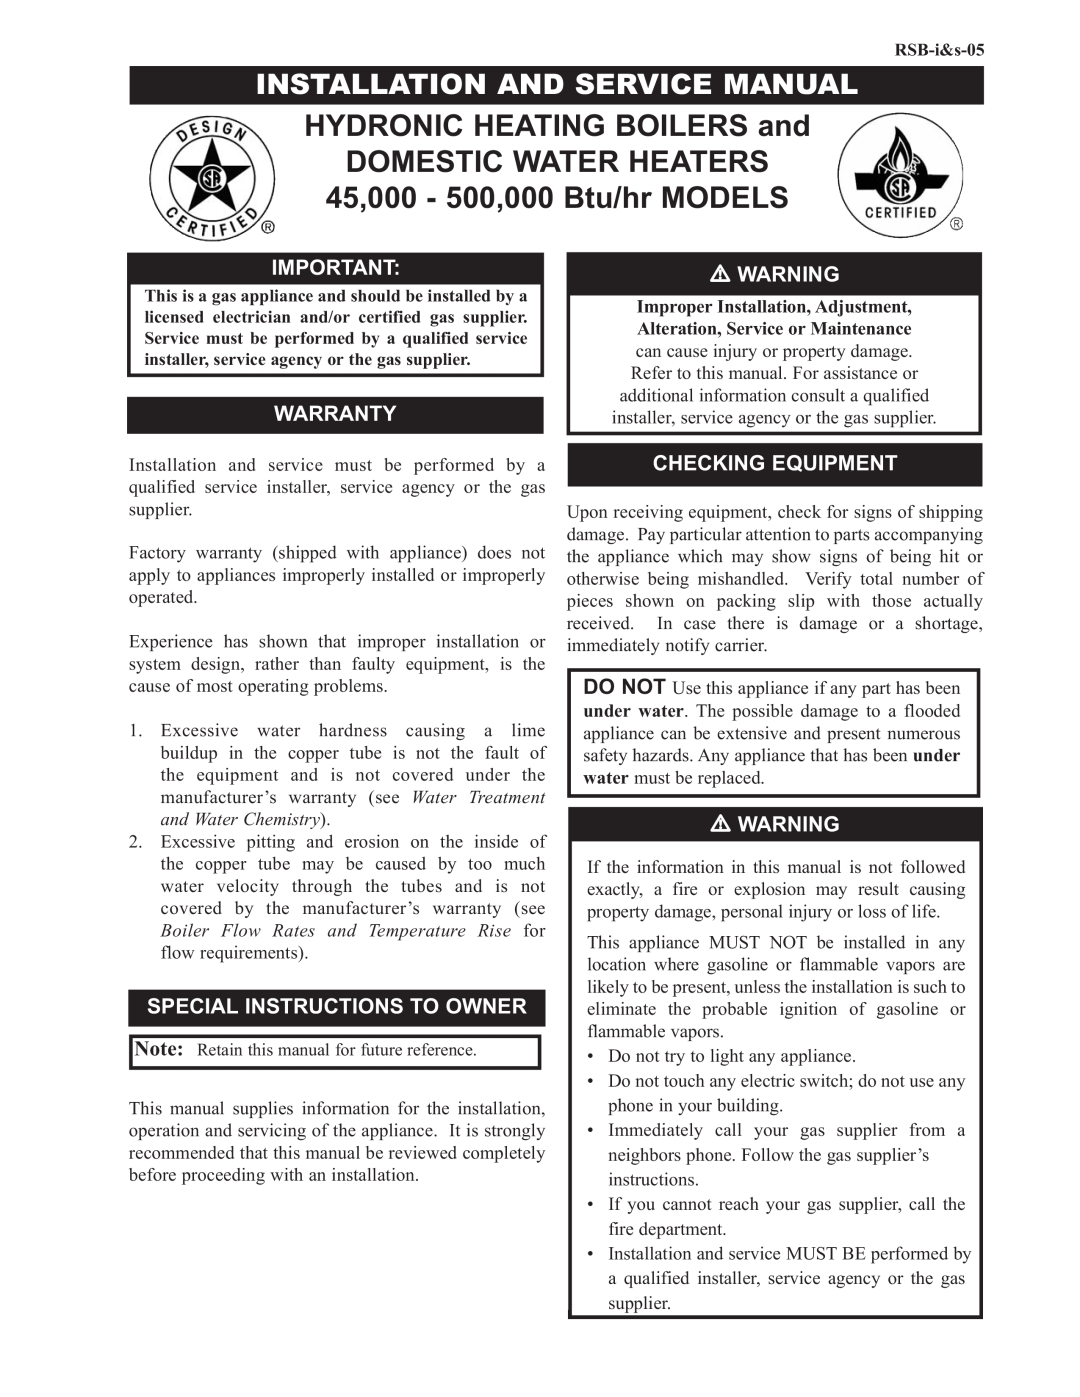 Lochinvar service manual Models 45,000 - 260,000 Btu/hr, SBR-I-SRev A, Save this manual for future reference 